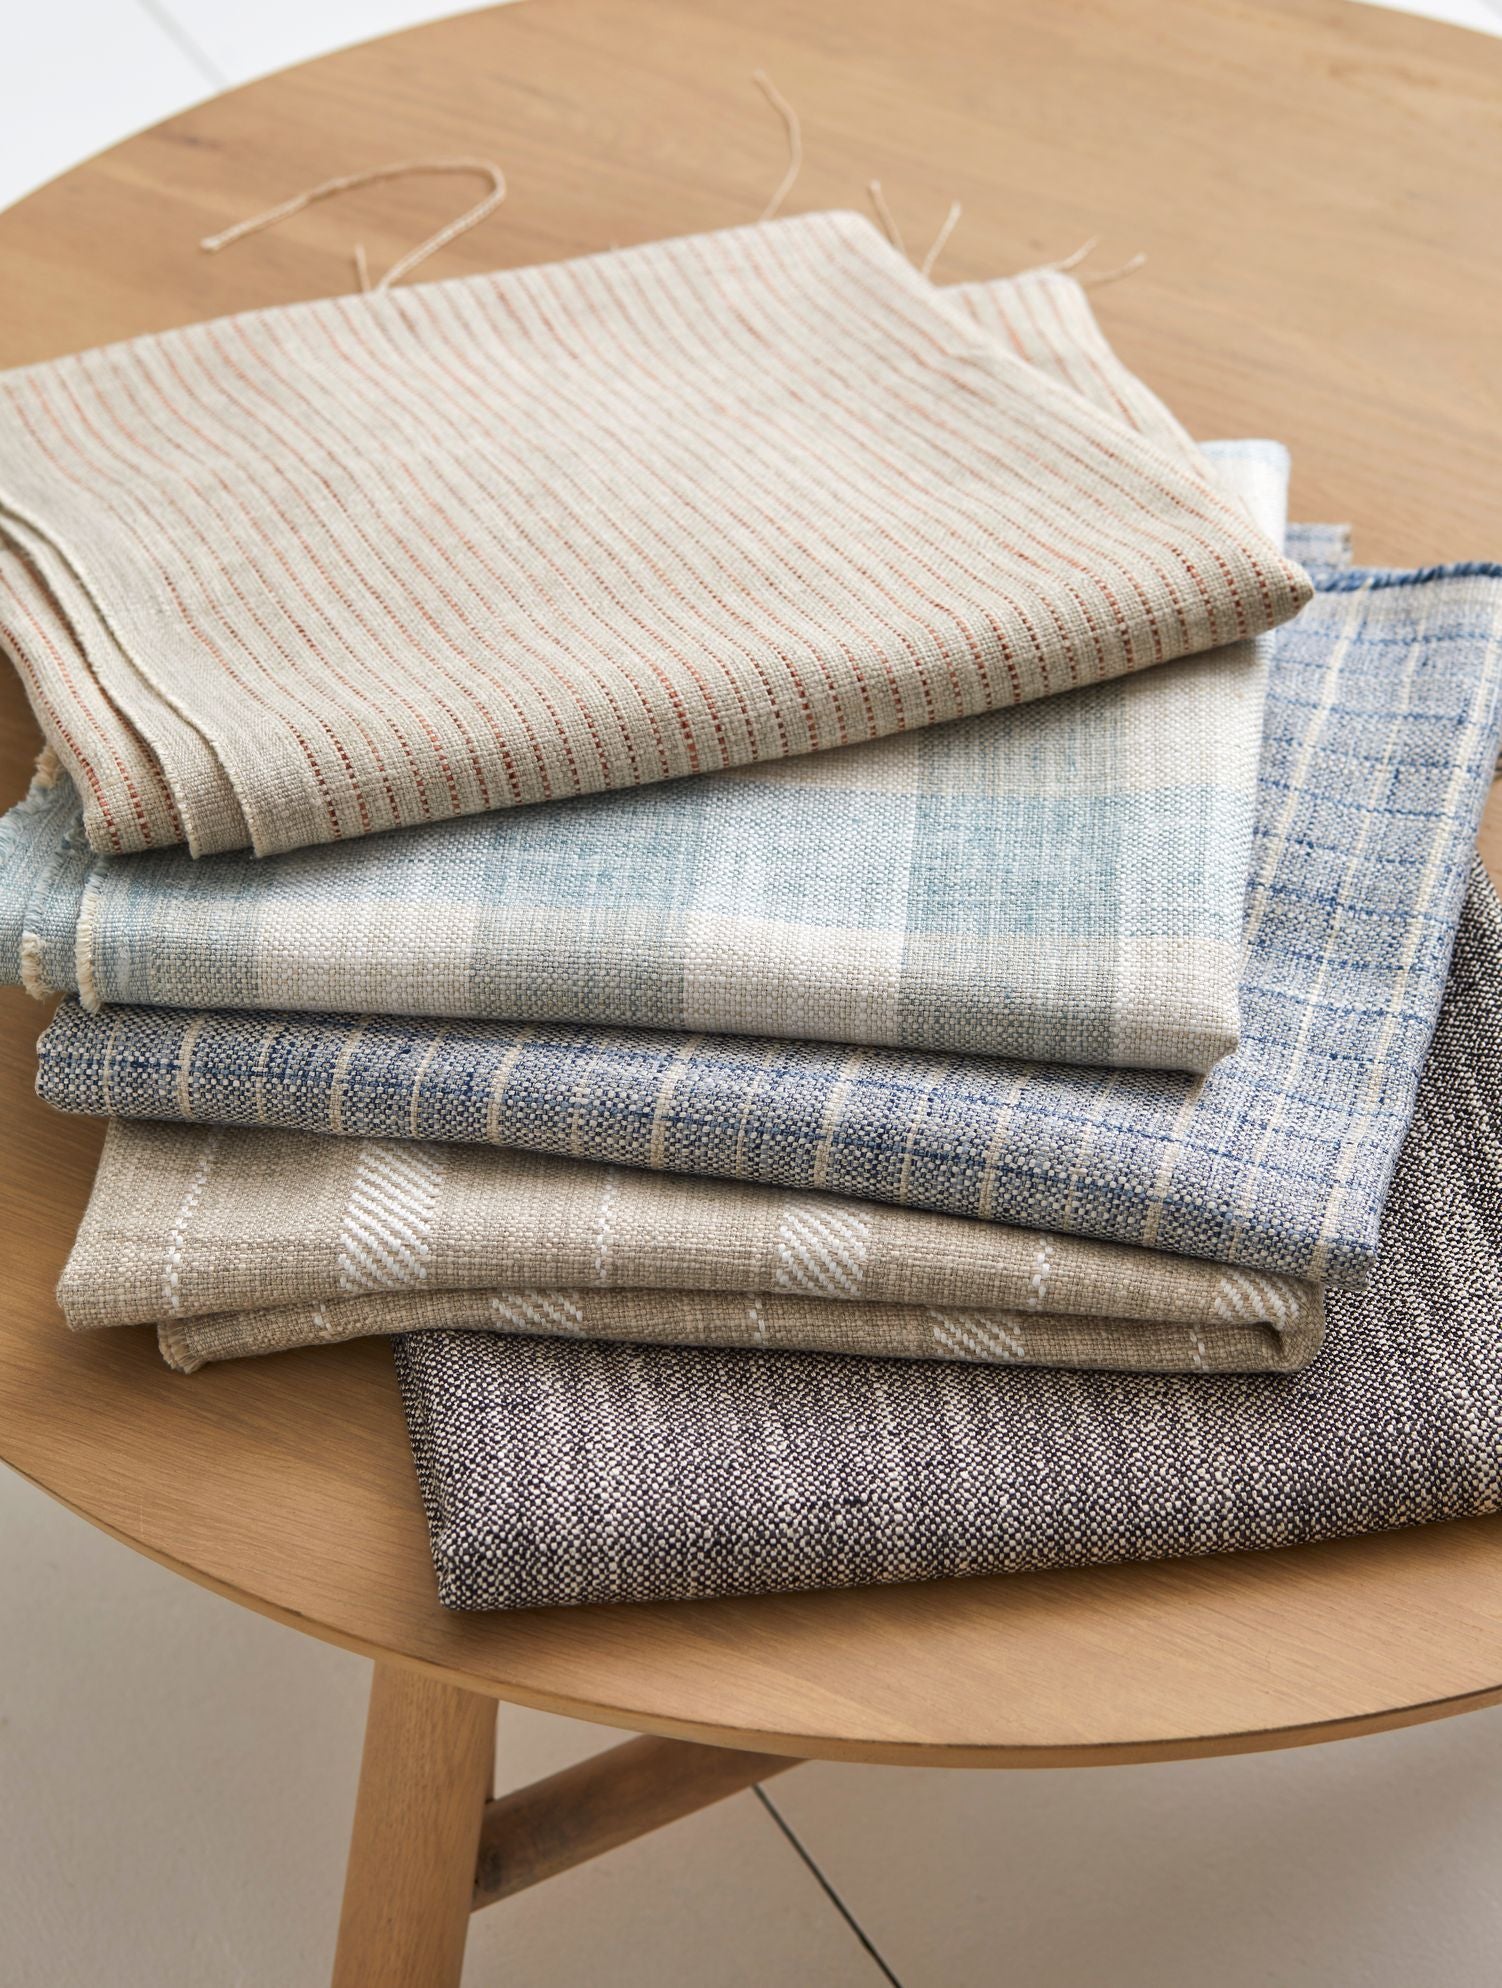 Check Arlington Fabric from Warwick Fabrics